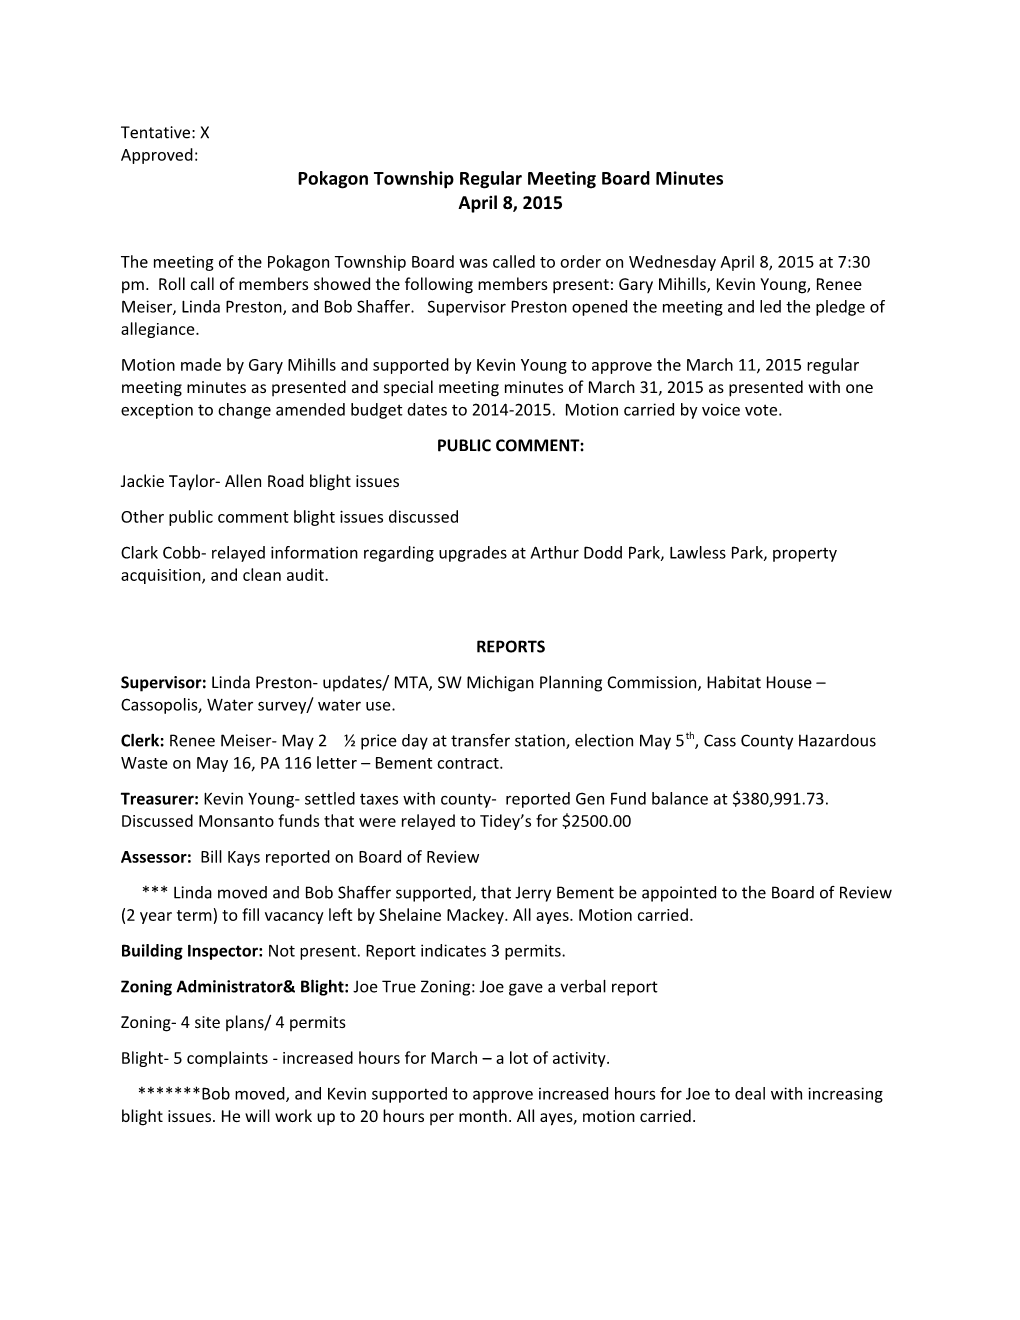 Pokagon Township Regular Meeting Board Minutes